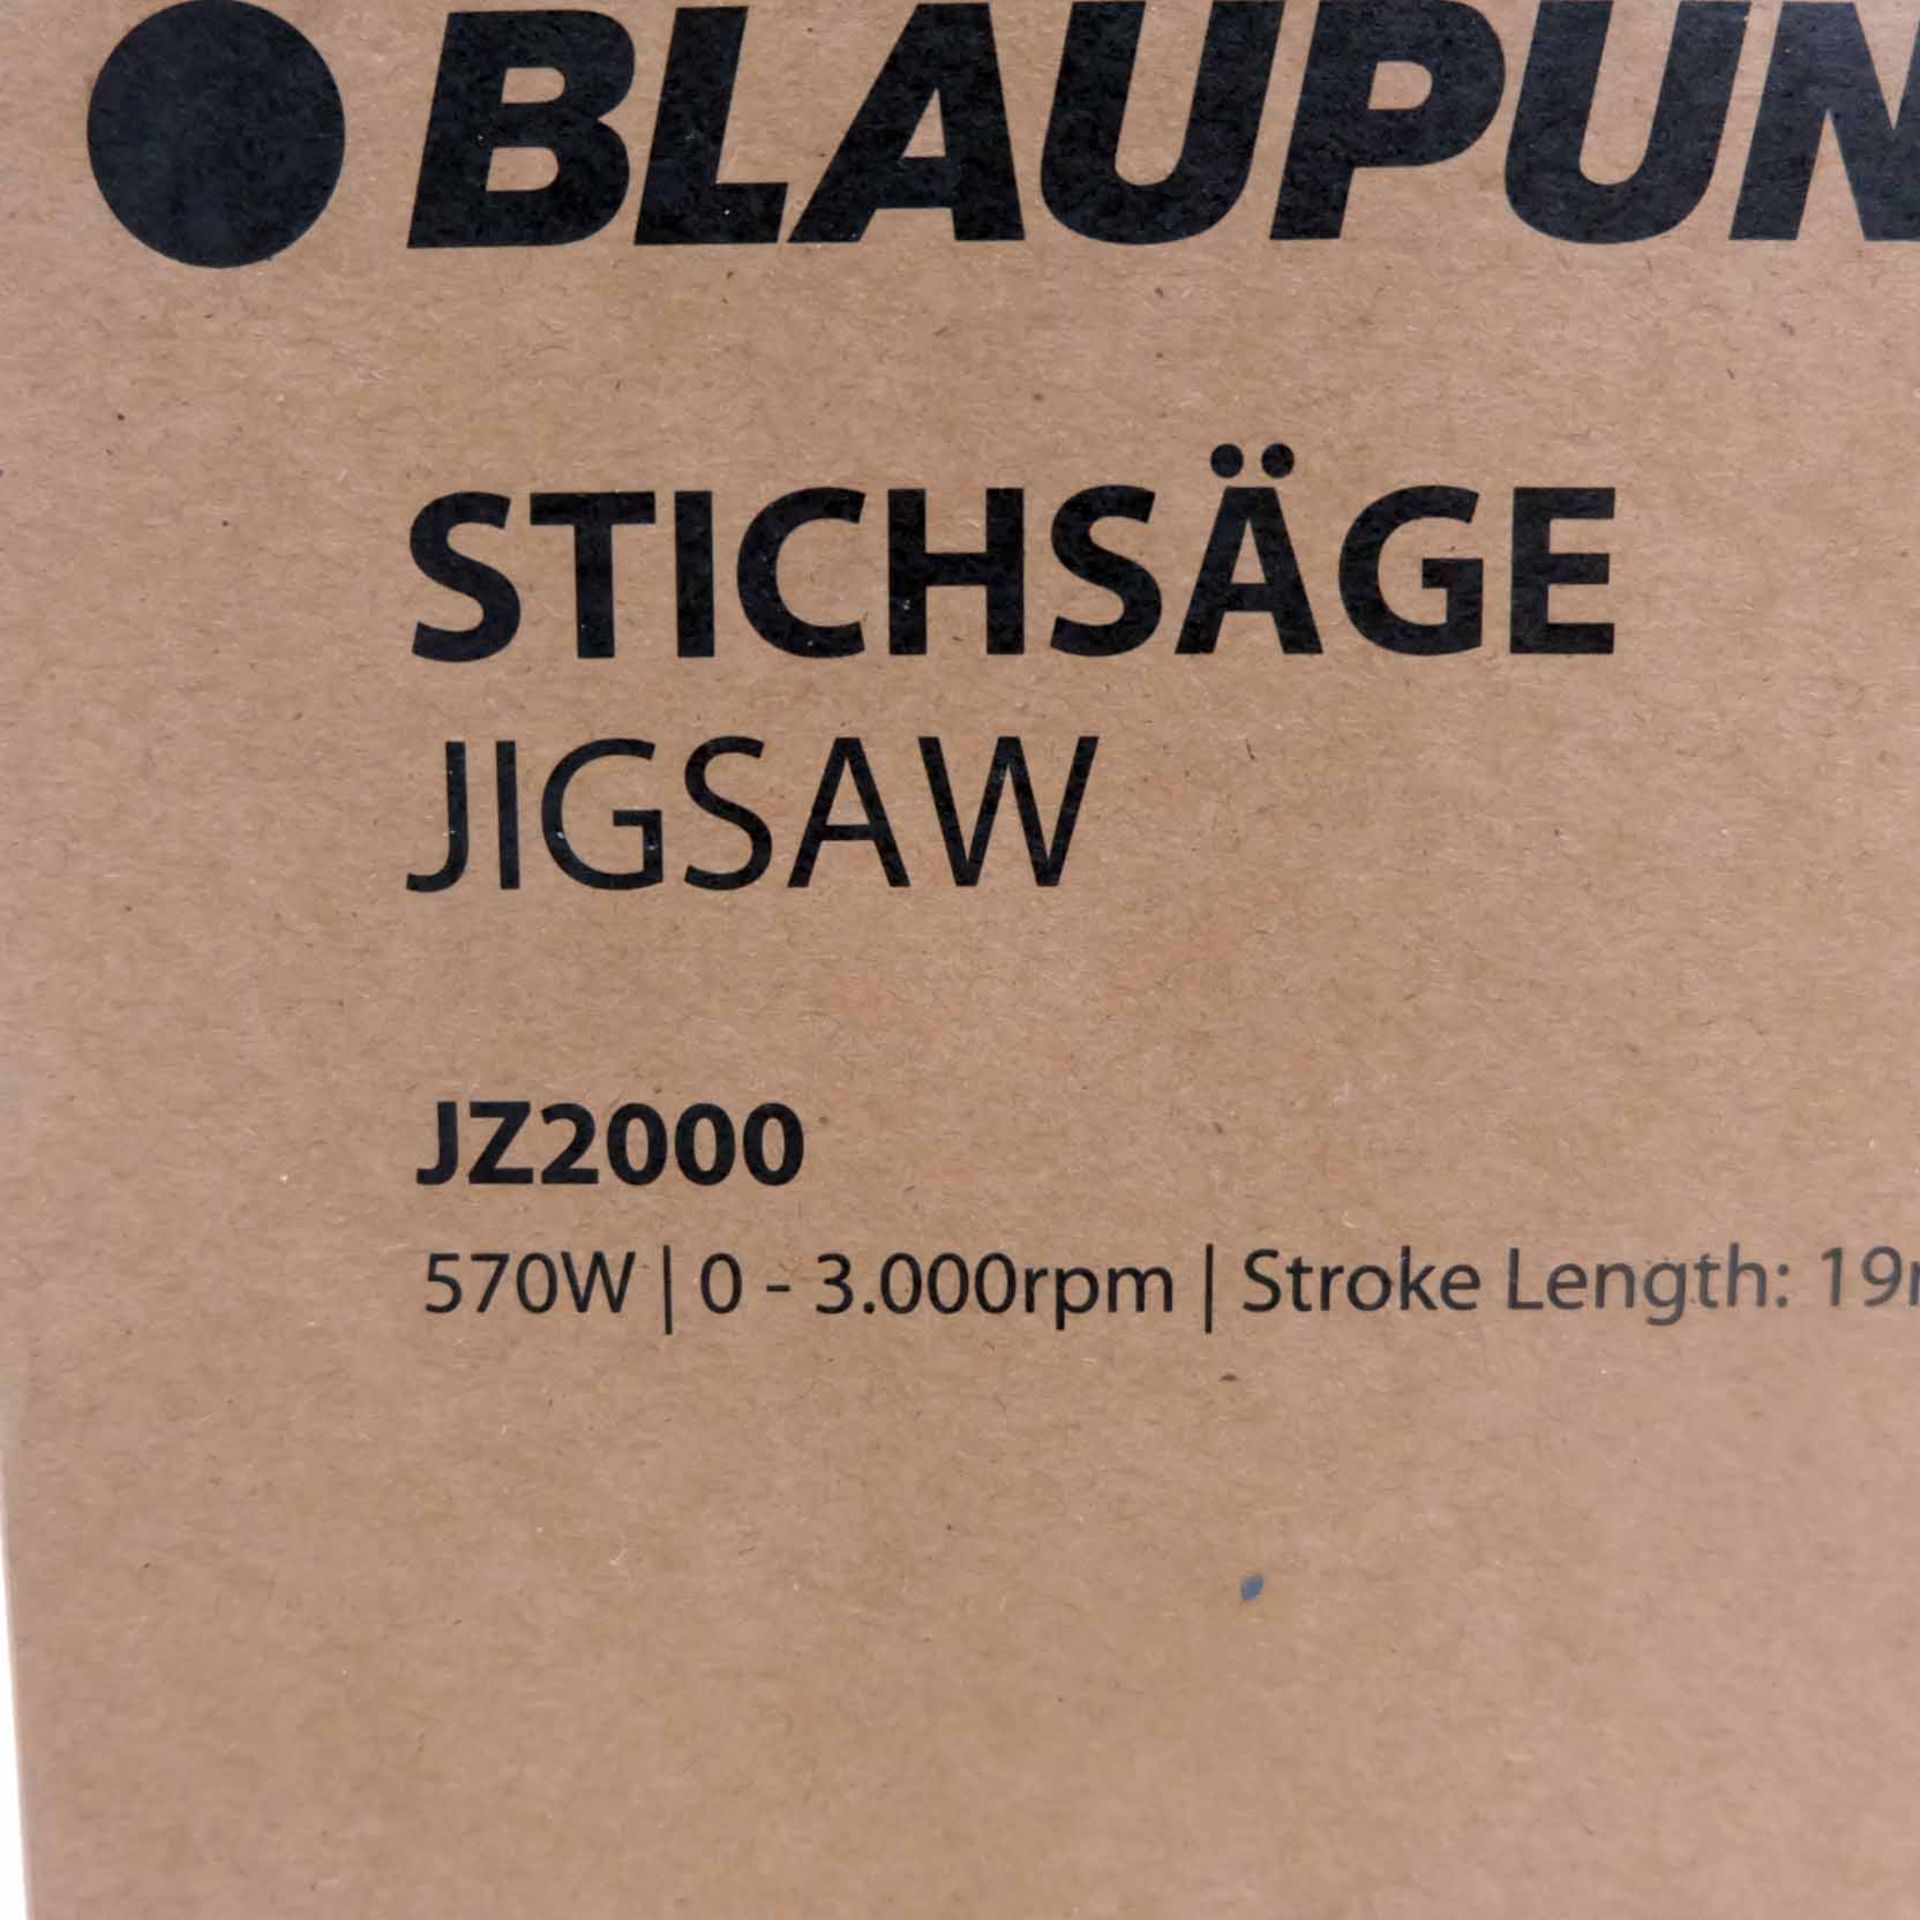 Blaupunkt STITAGE Jigsaw. Model JZ2000. 570W. 0-3000rpm. Stroke Length 19mm. - Image 8 of 9